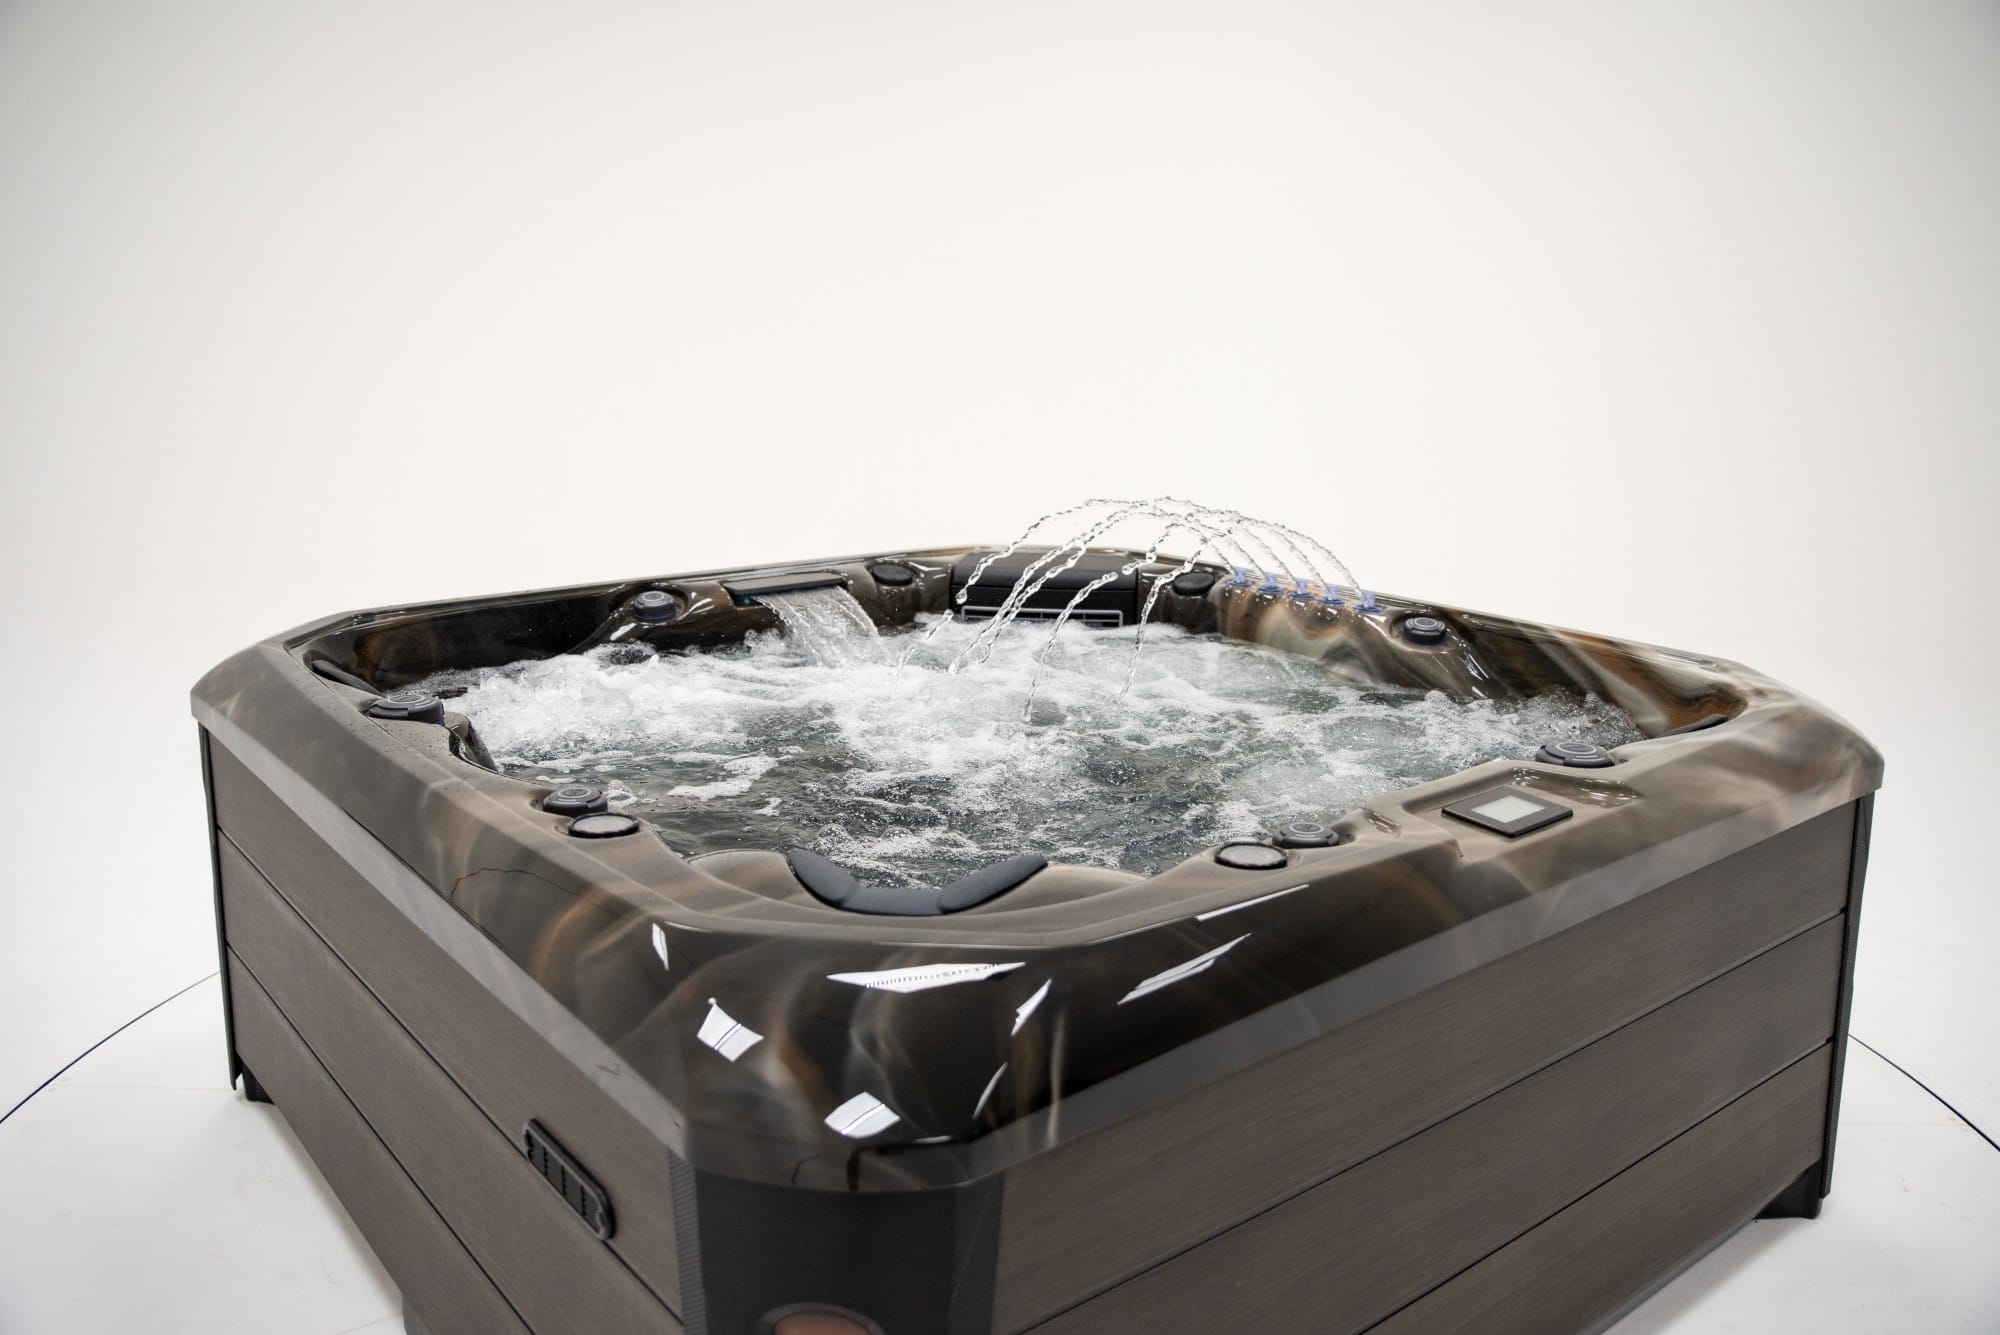 Barcelona hot tubs for sale from Platinum Spas